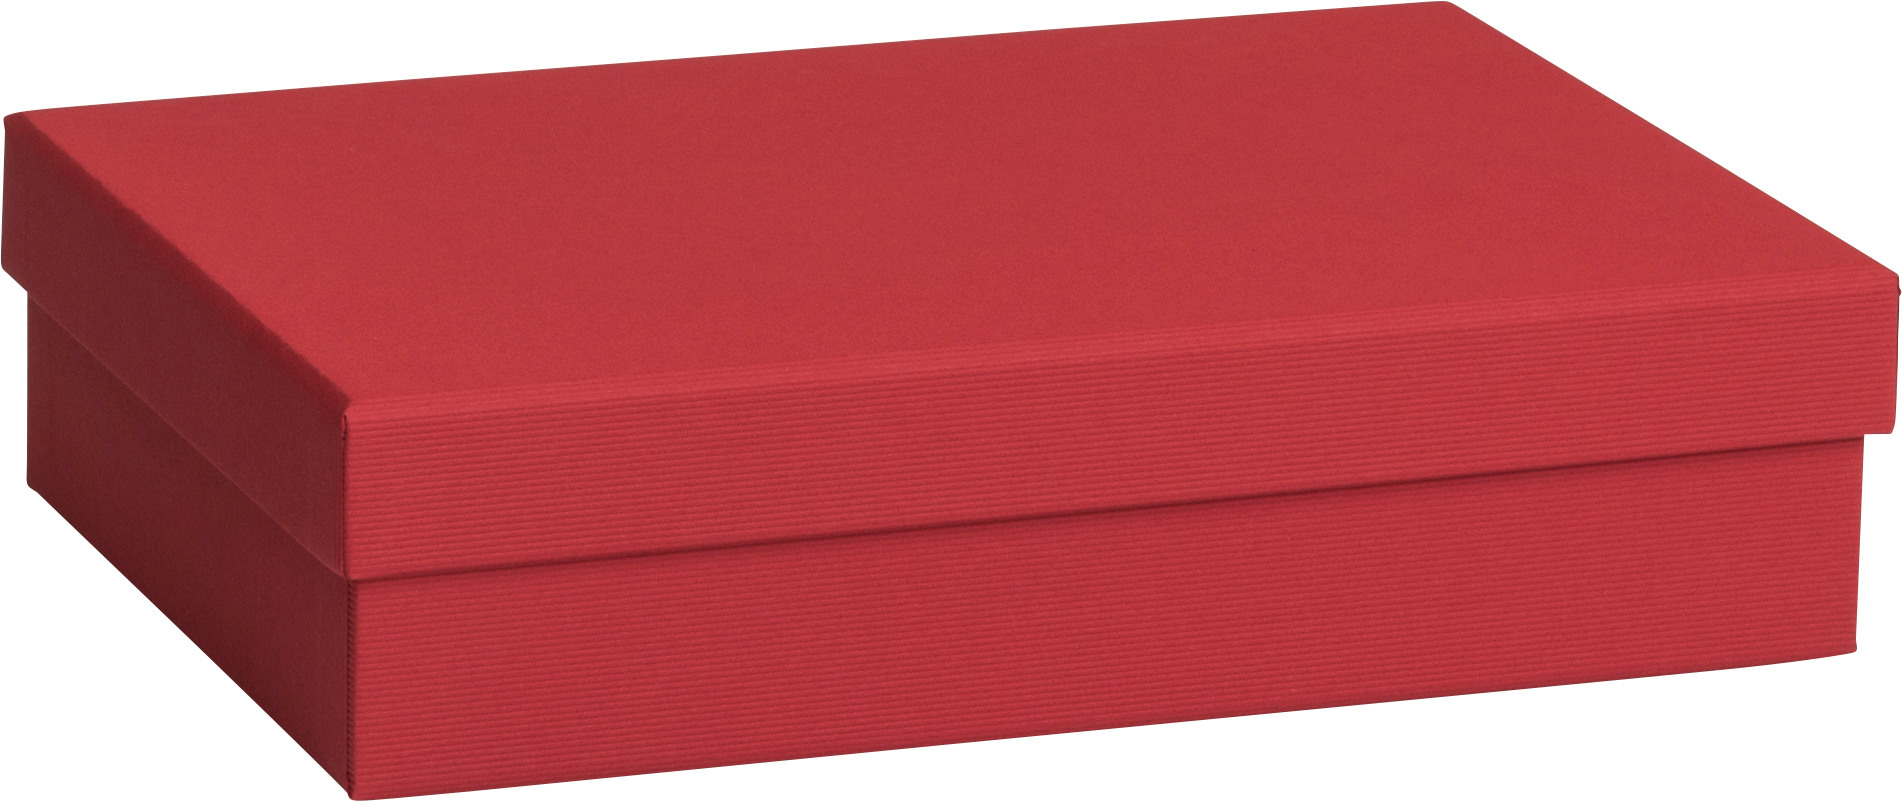 STEWO Geschenkbox One Colour 2551784292 rot dunkel 16.5x24x6cm